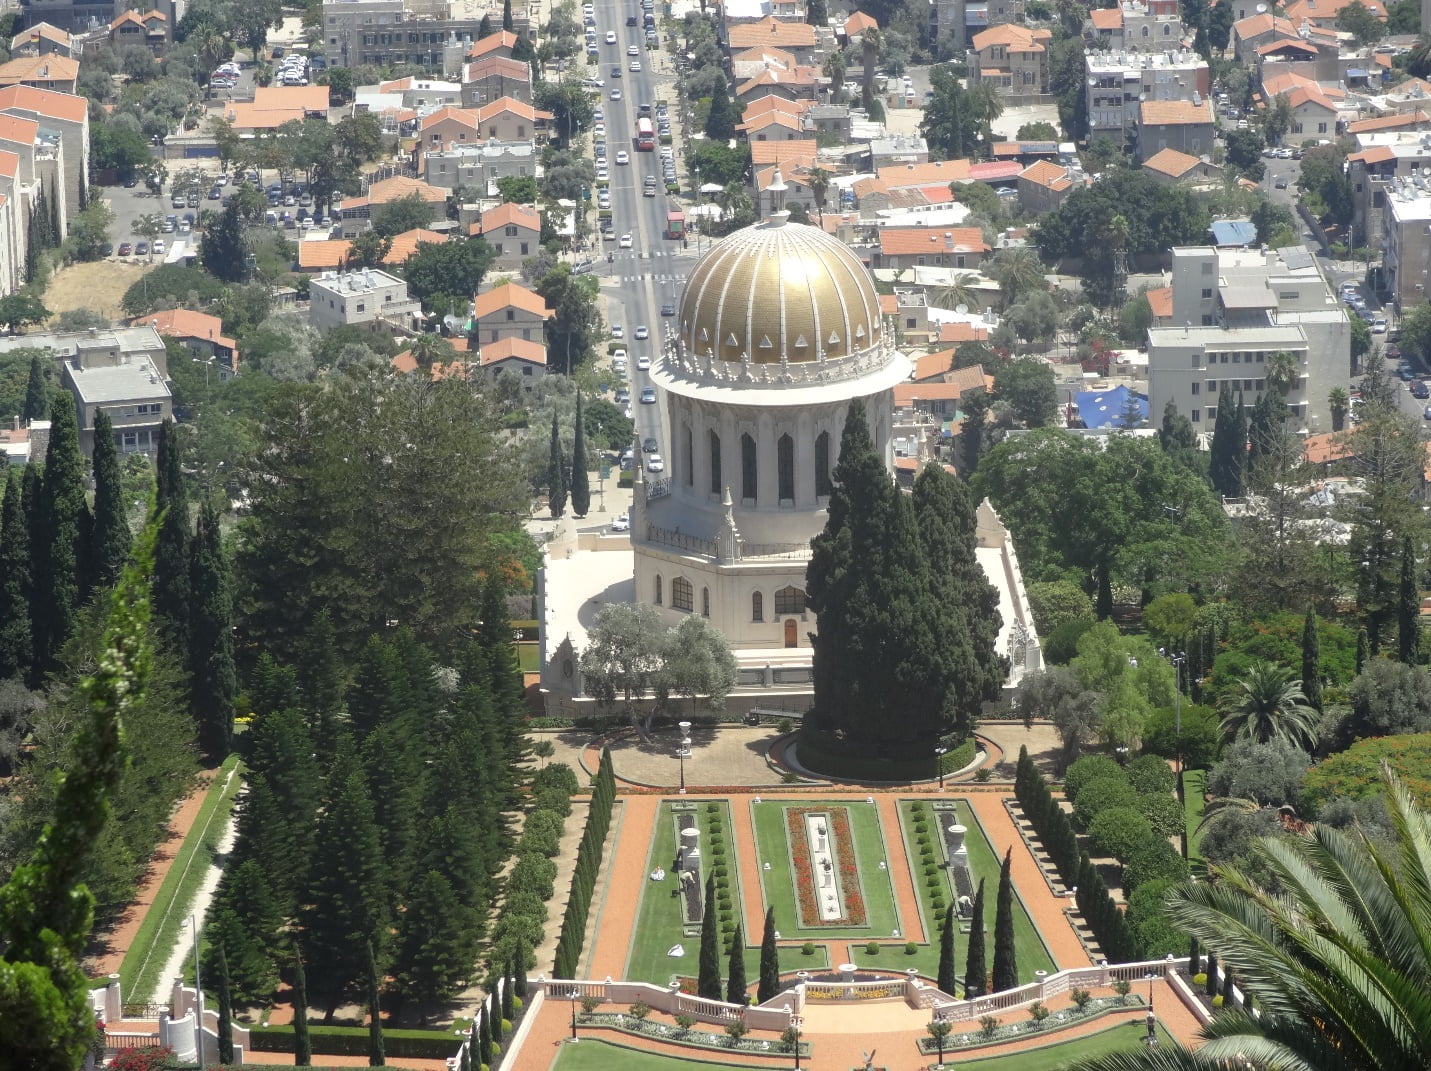 The Bahai temple in my hometown - Haifa, Israel